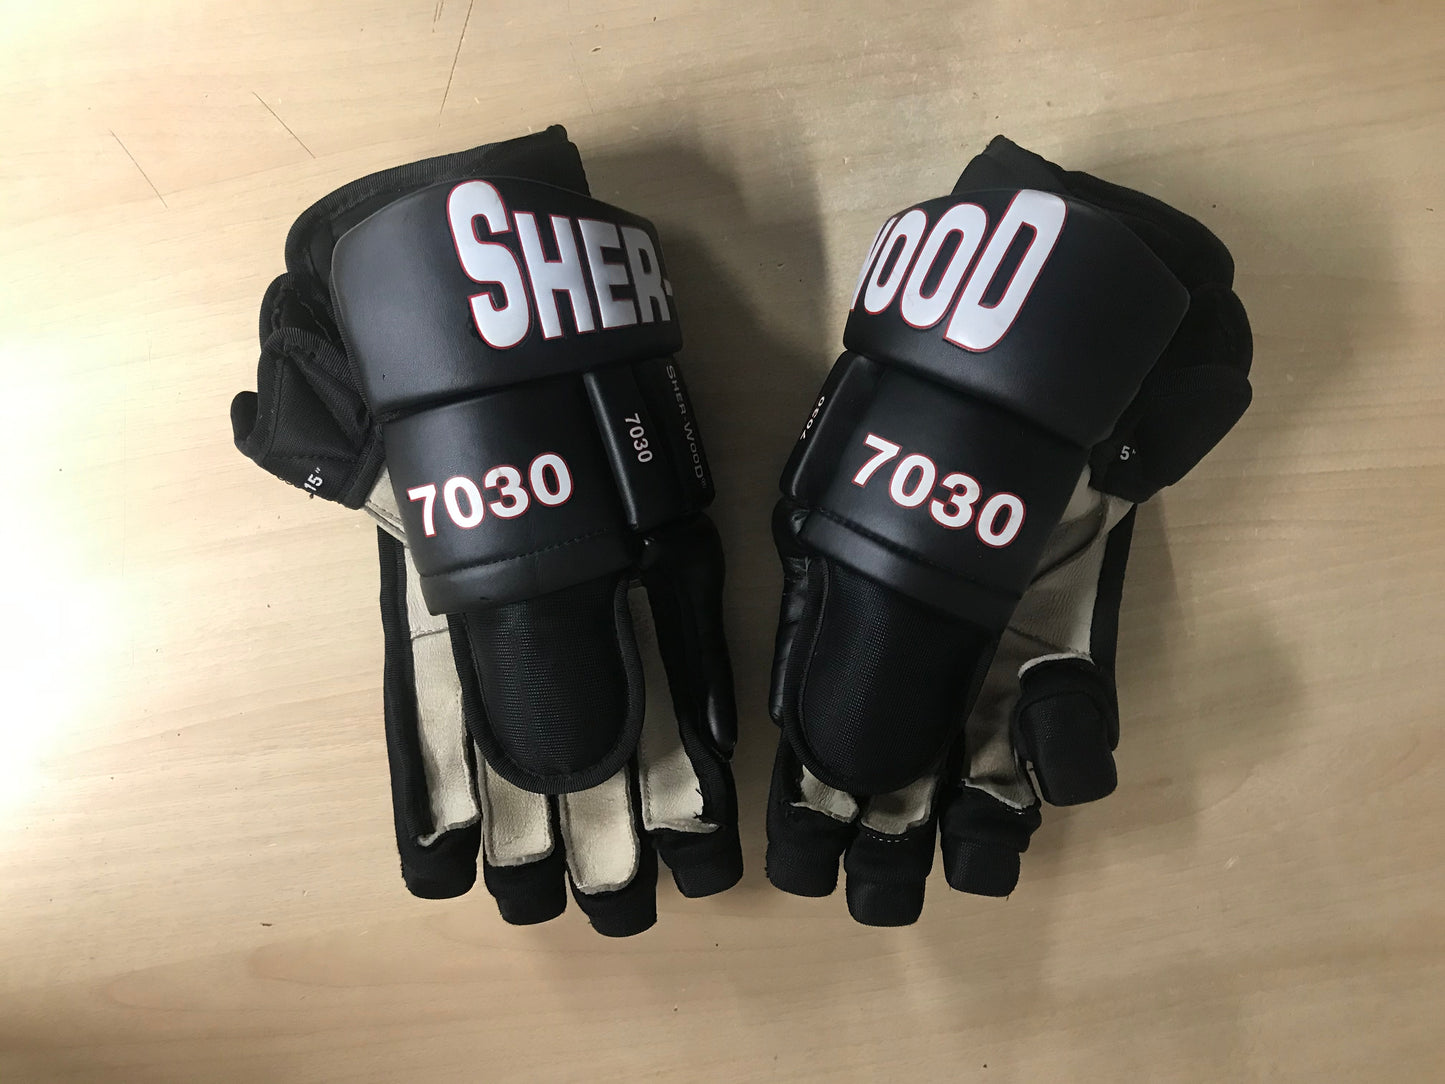 Hockey Gloves Men's Size 15 inch Sherwood 7030 New Demo Model